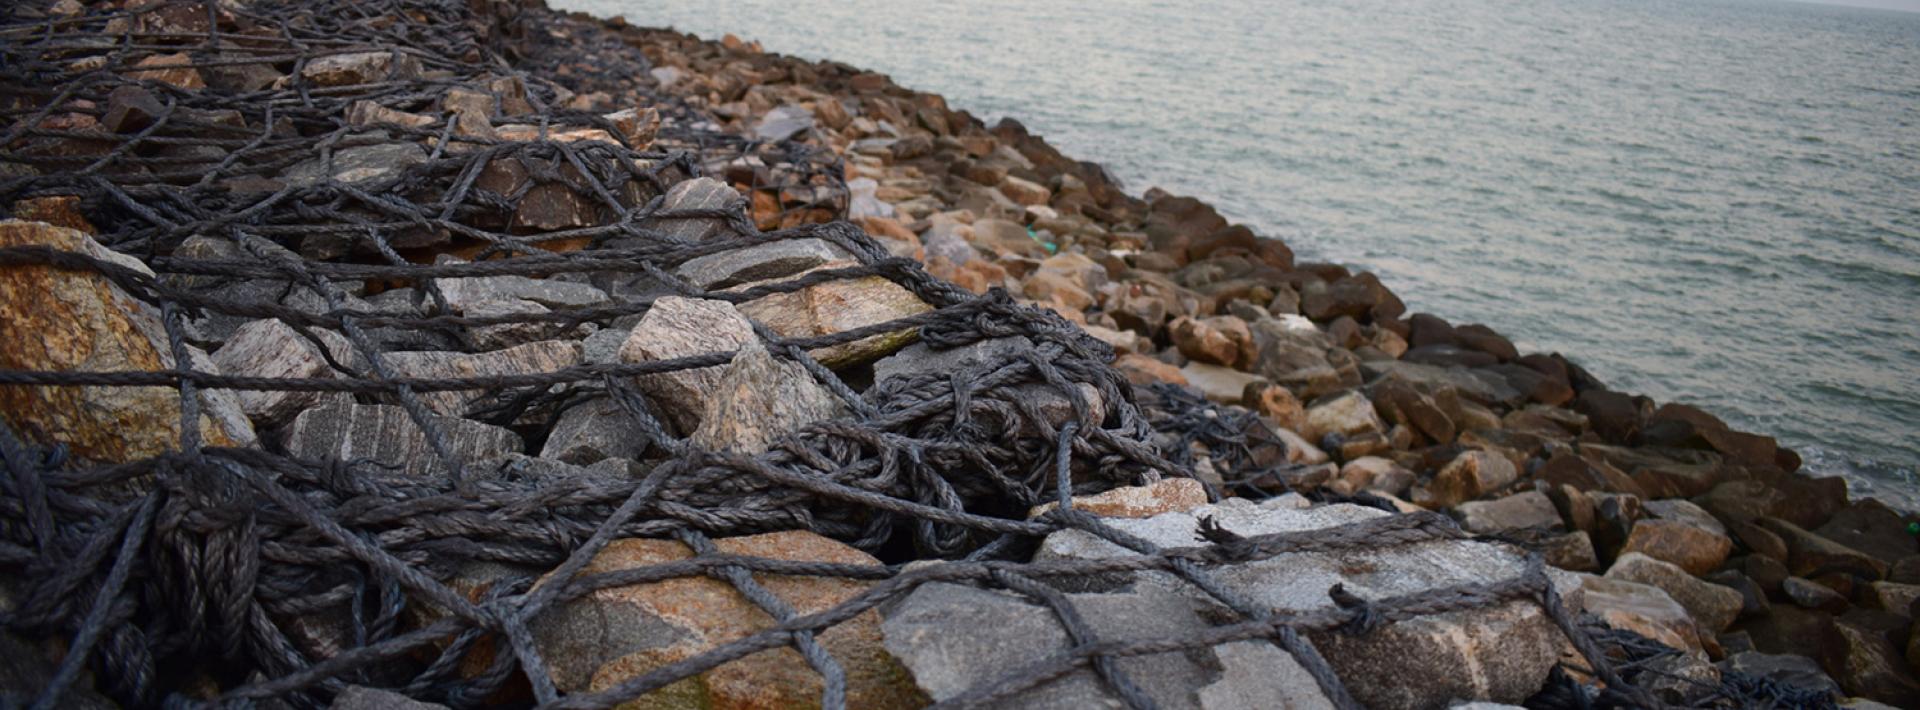 Sea erosion affecting lives and livelihoods in Odisha